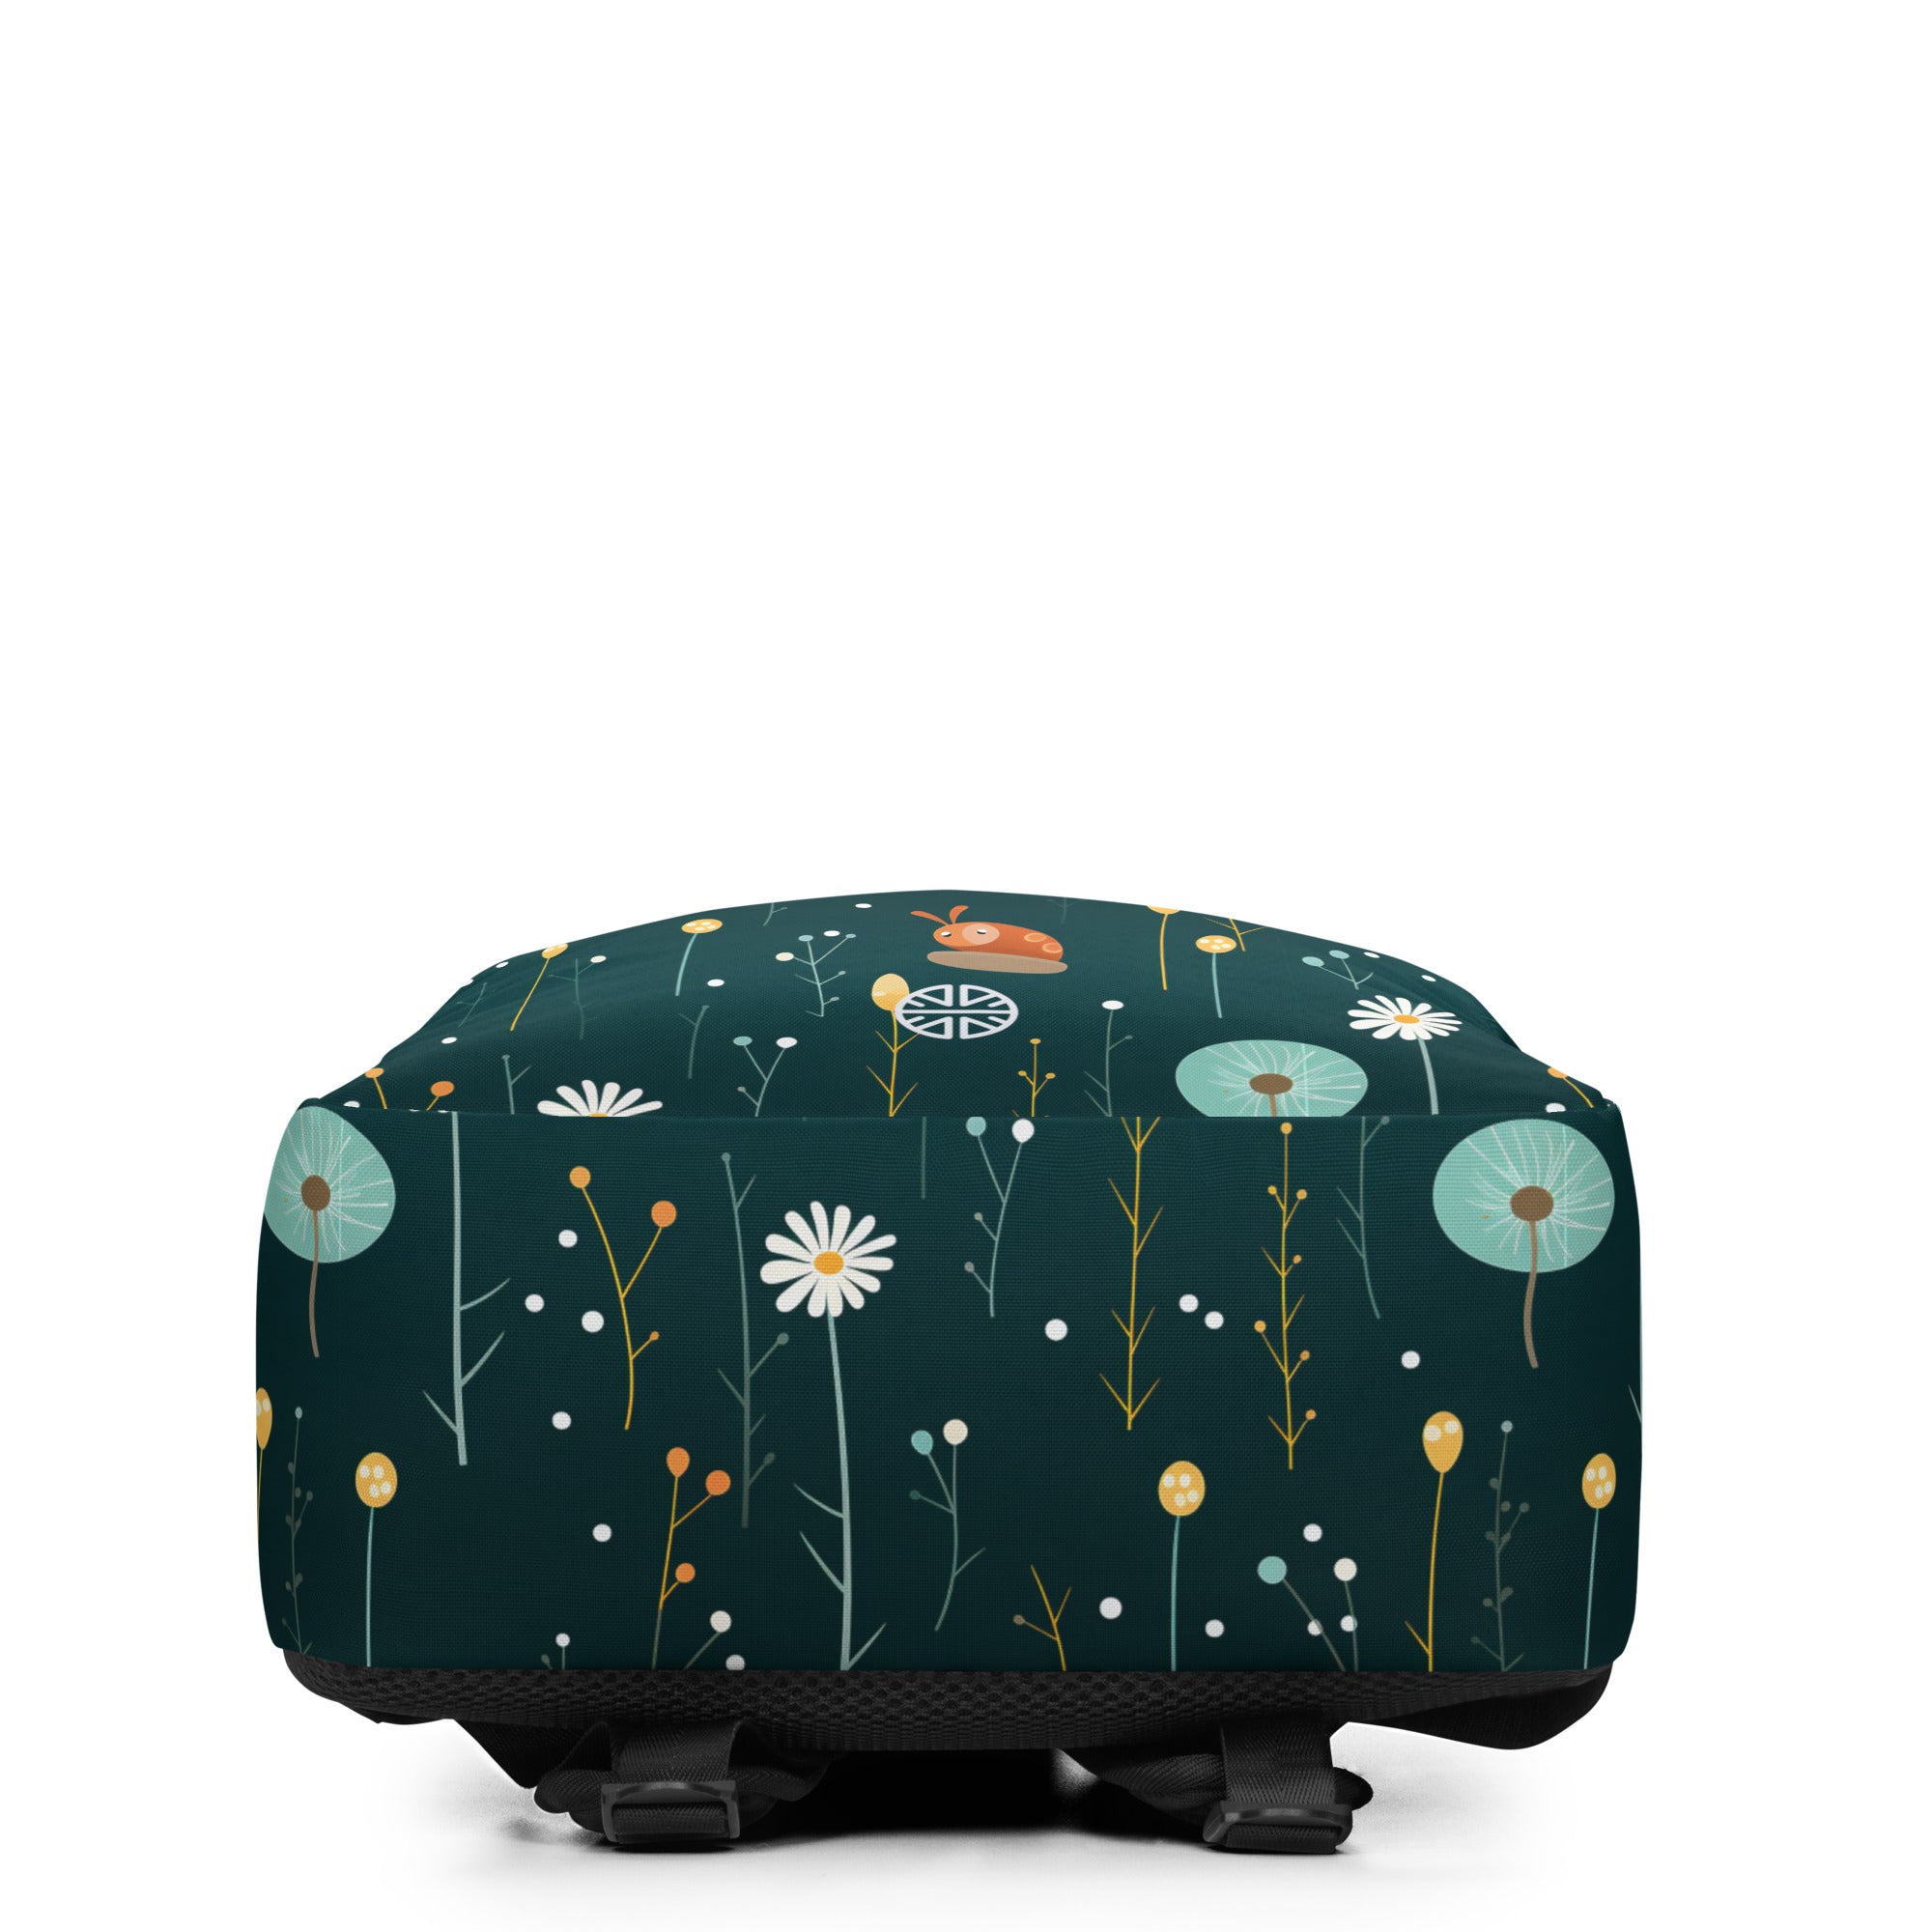 Petite & Playful Floral Snail Backpack: Your Little Elegant Adventure Buddy!